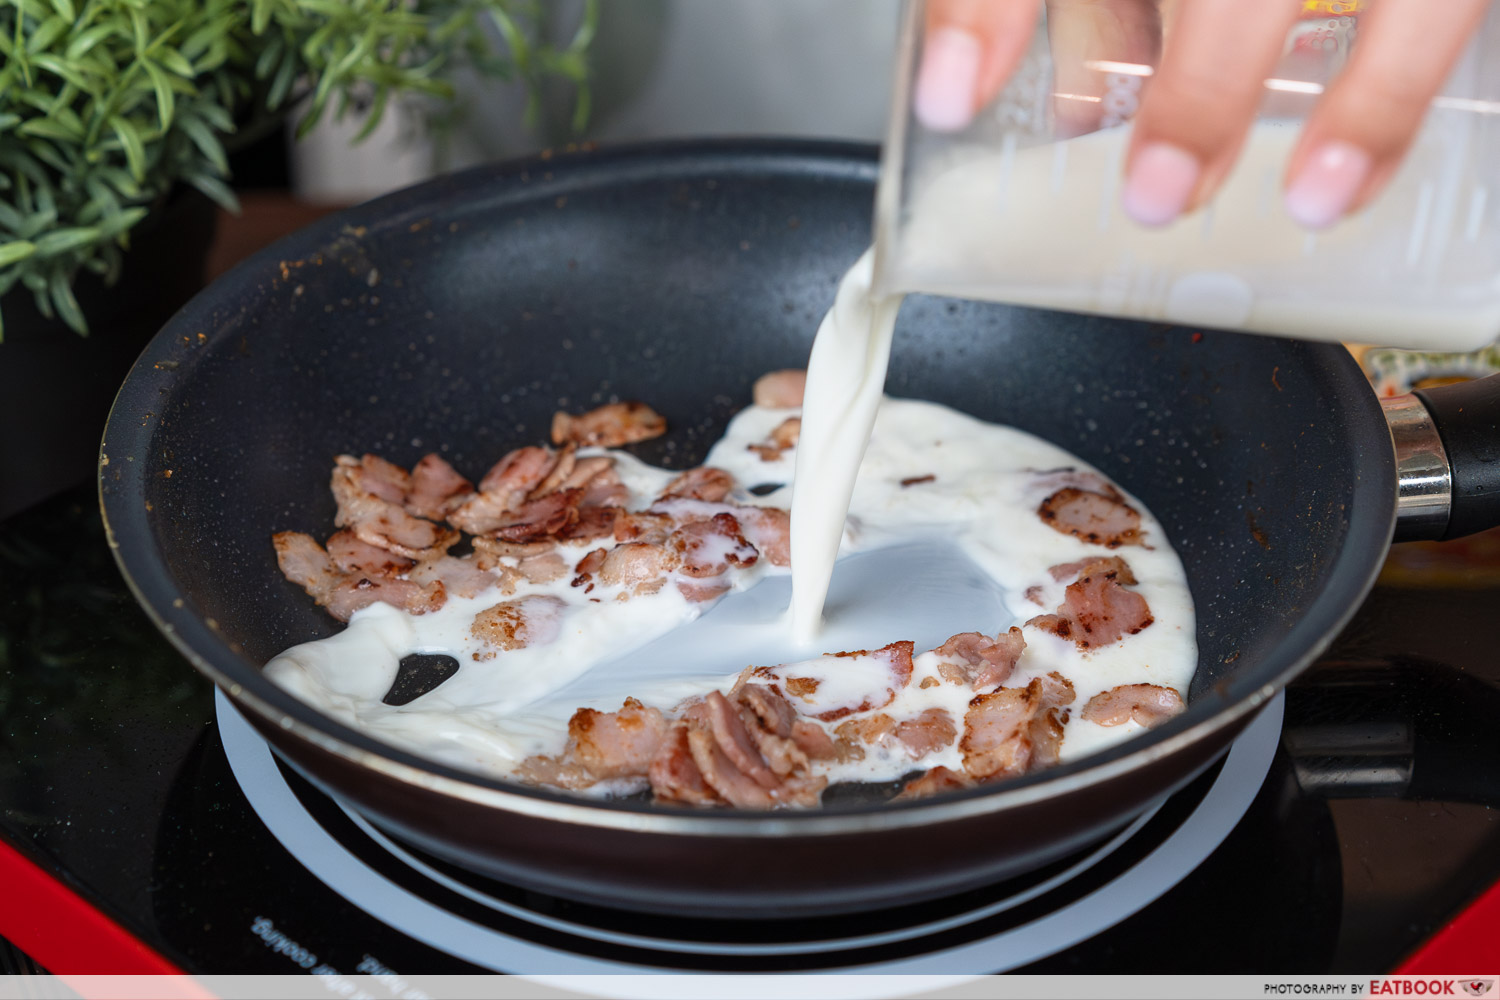 nissin ufo hacks - adding milk to pan